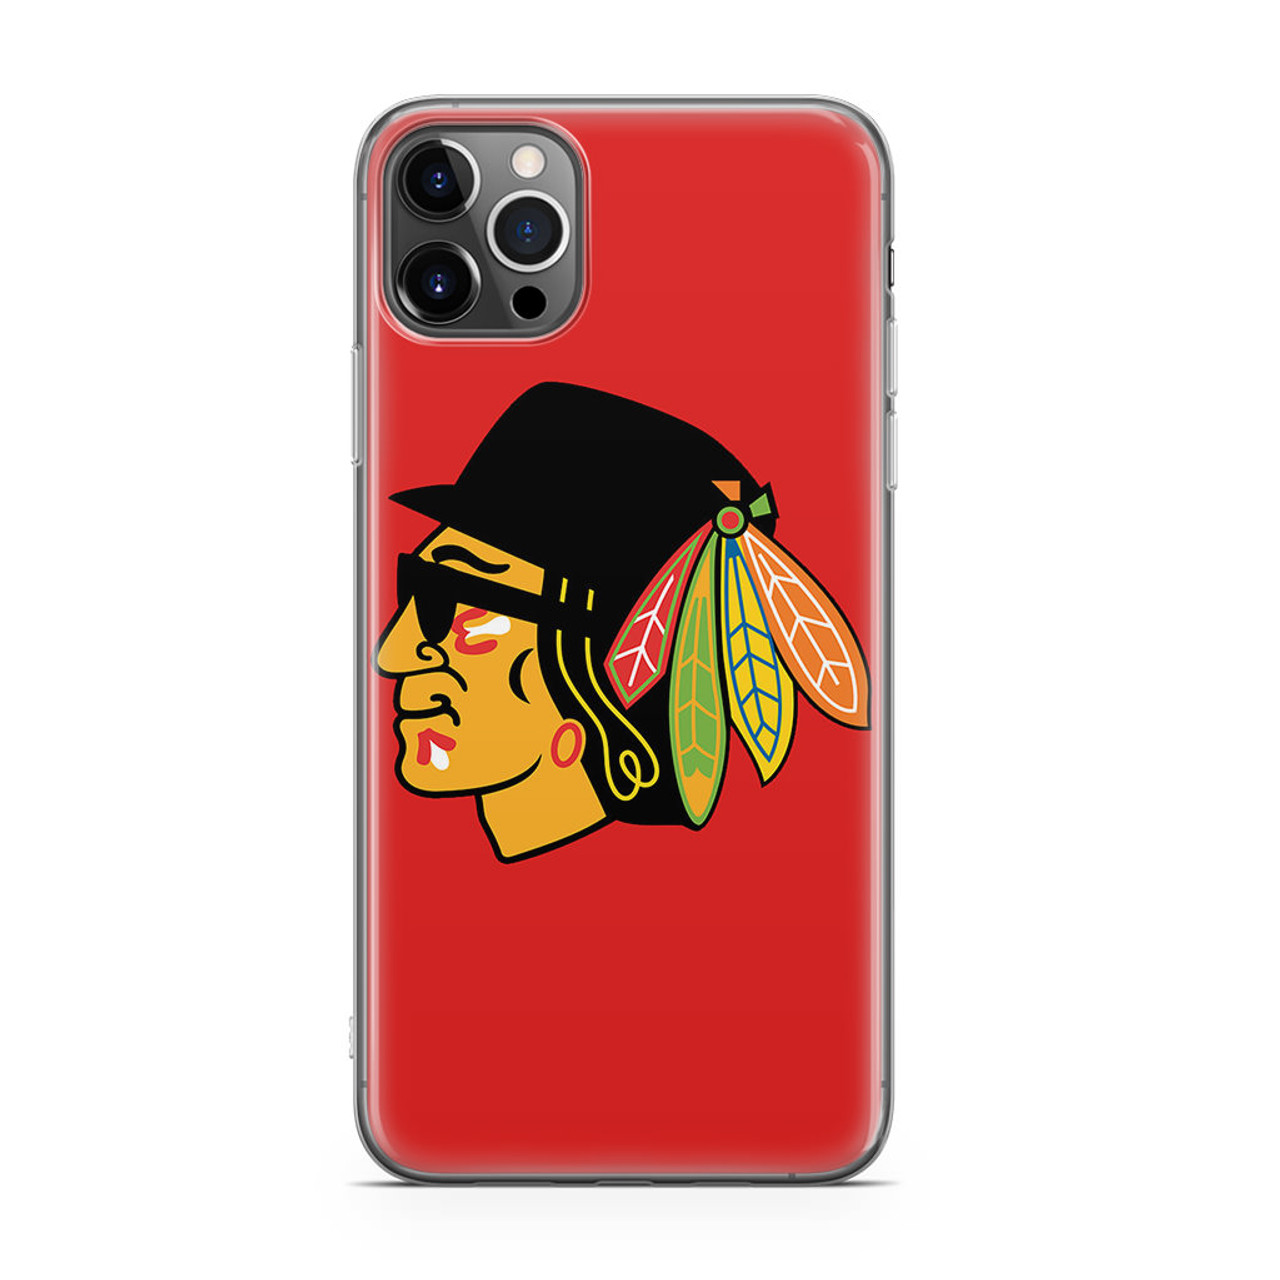 Chicago Blackhawks iPhone 12 Case